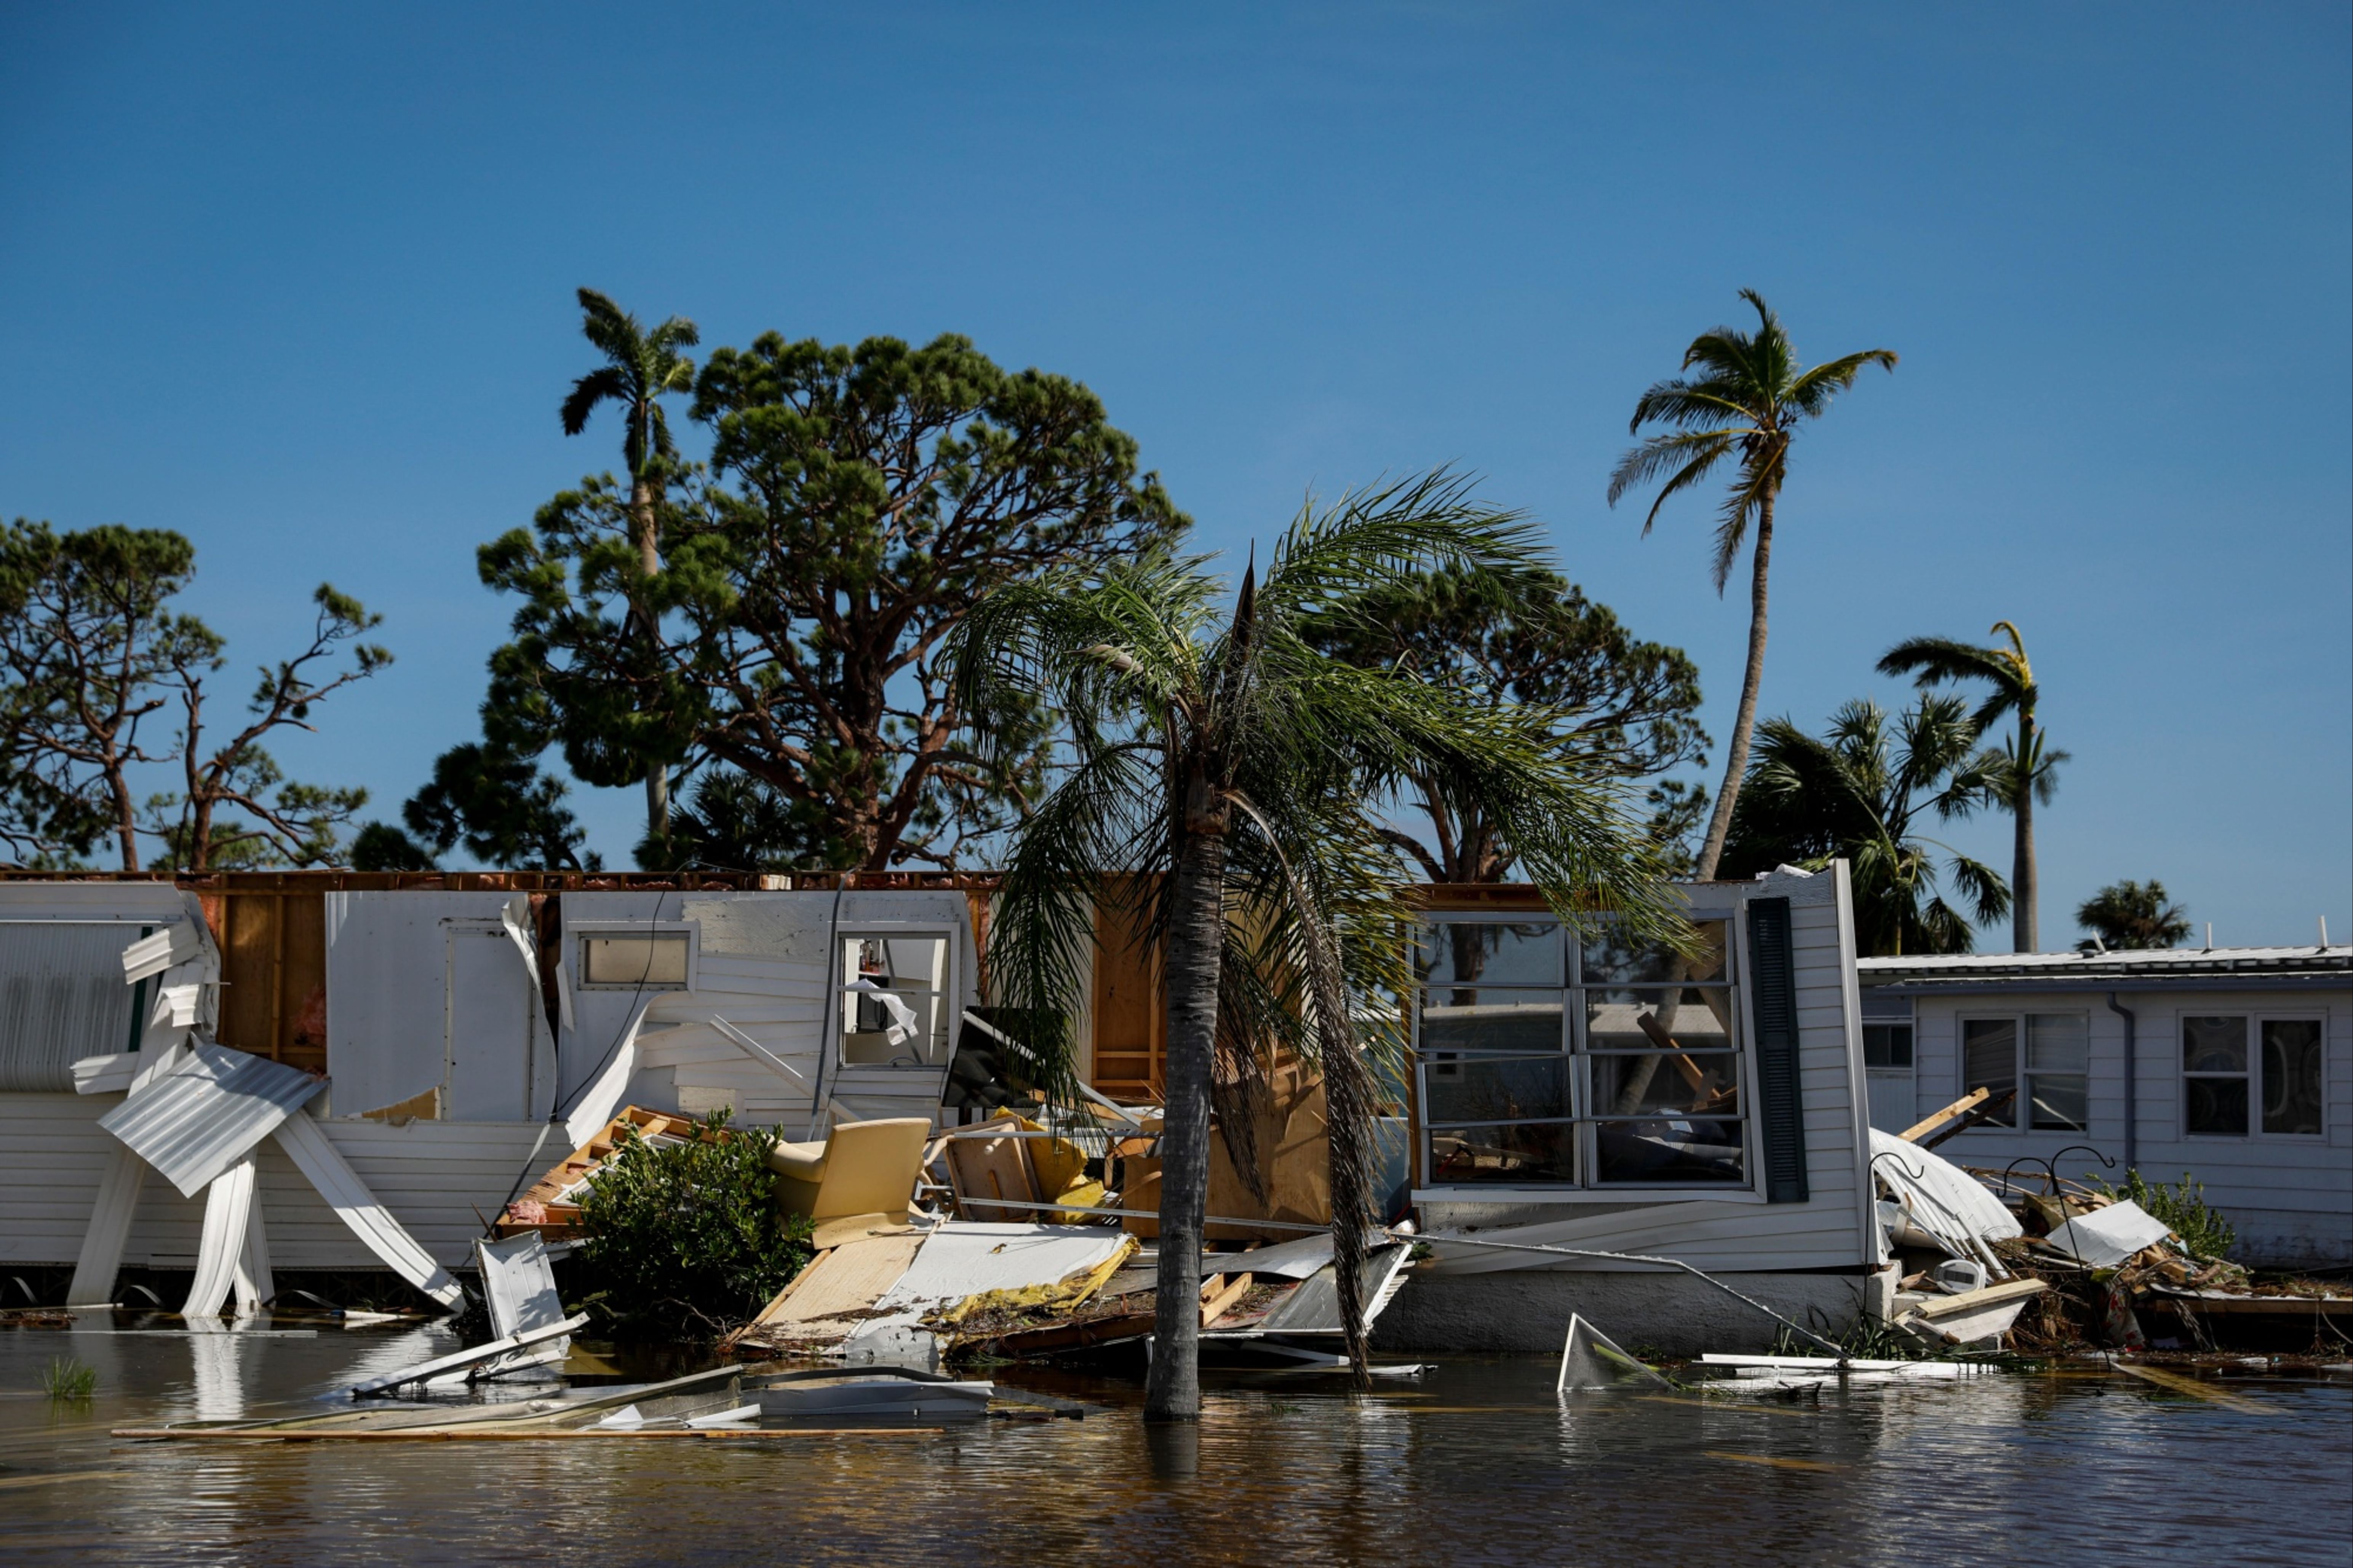 Foto-Foto Dahsyatnya Badai Ian Terjang Florida AS